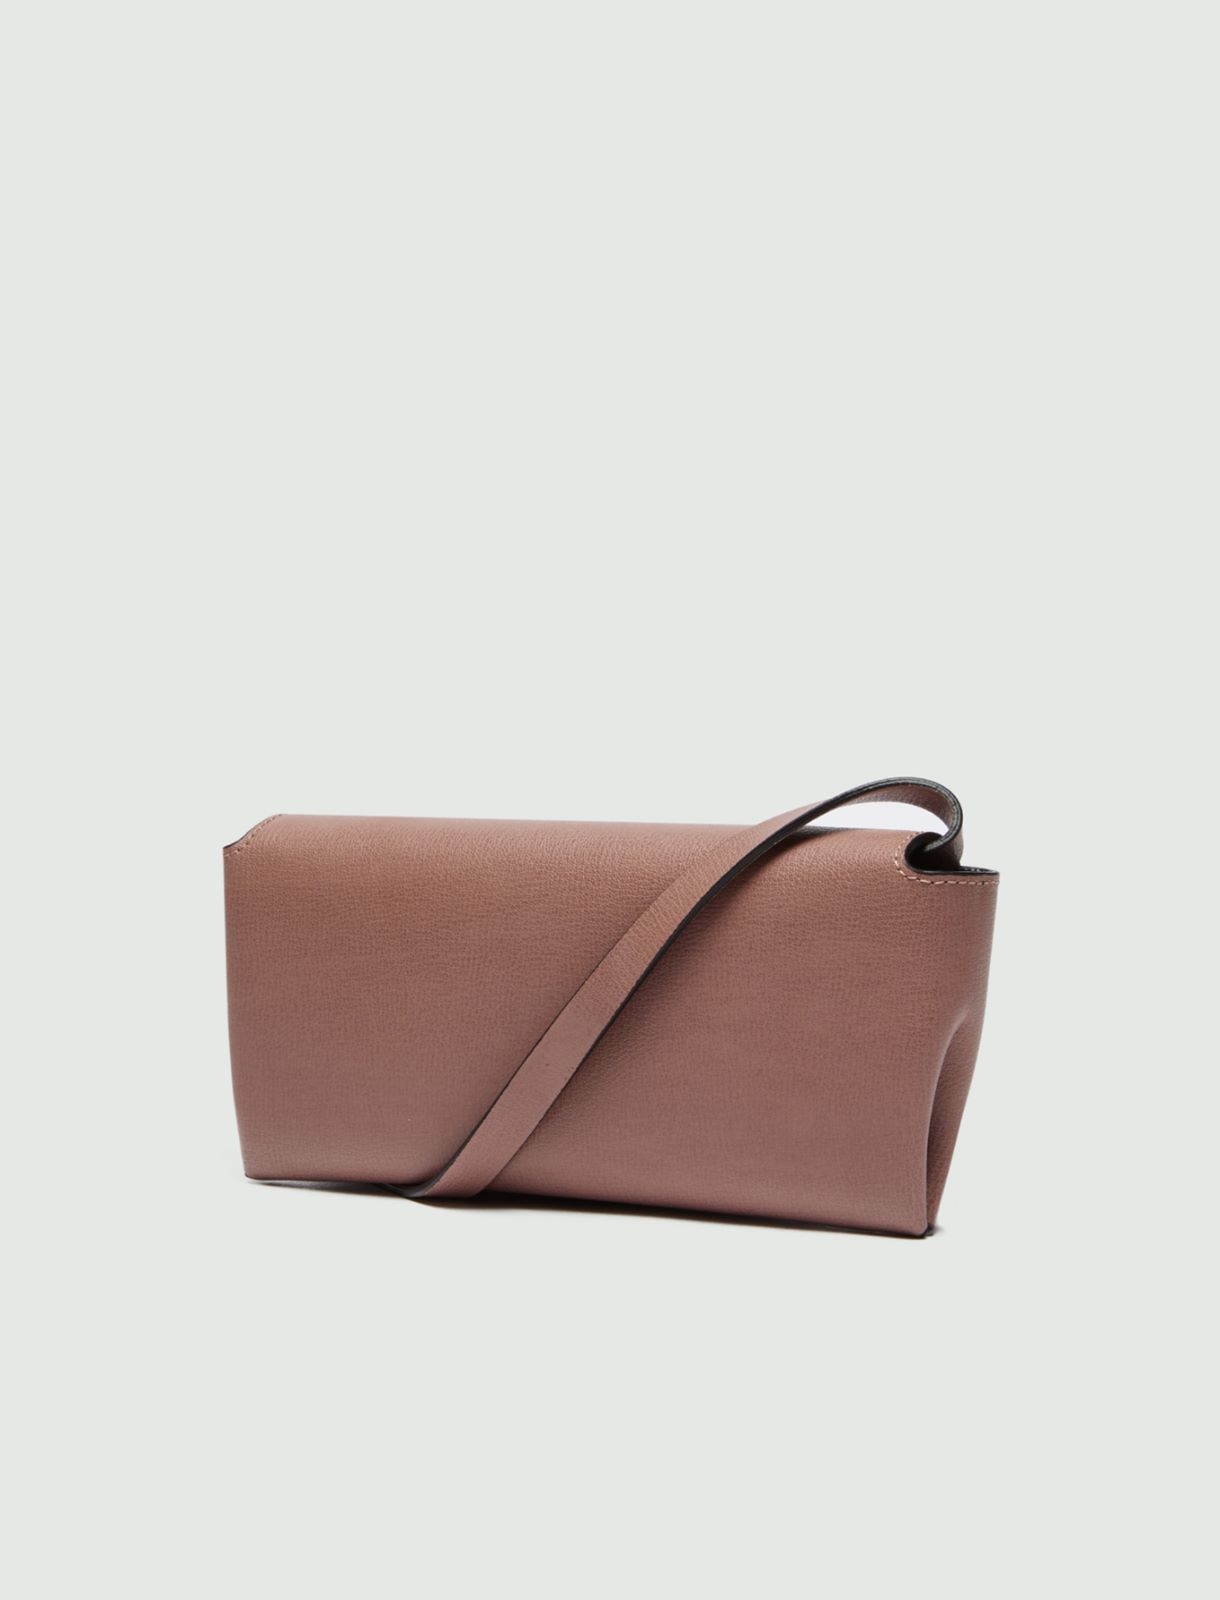 Portemonnaie-Tasche aus Leder  - Altrosa - Marella - 2